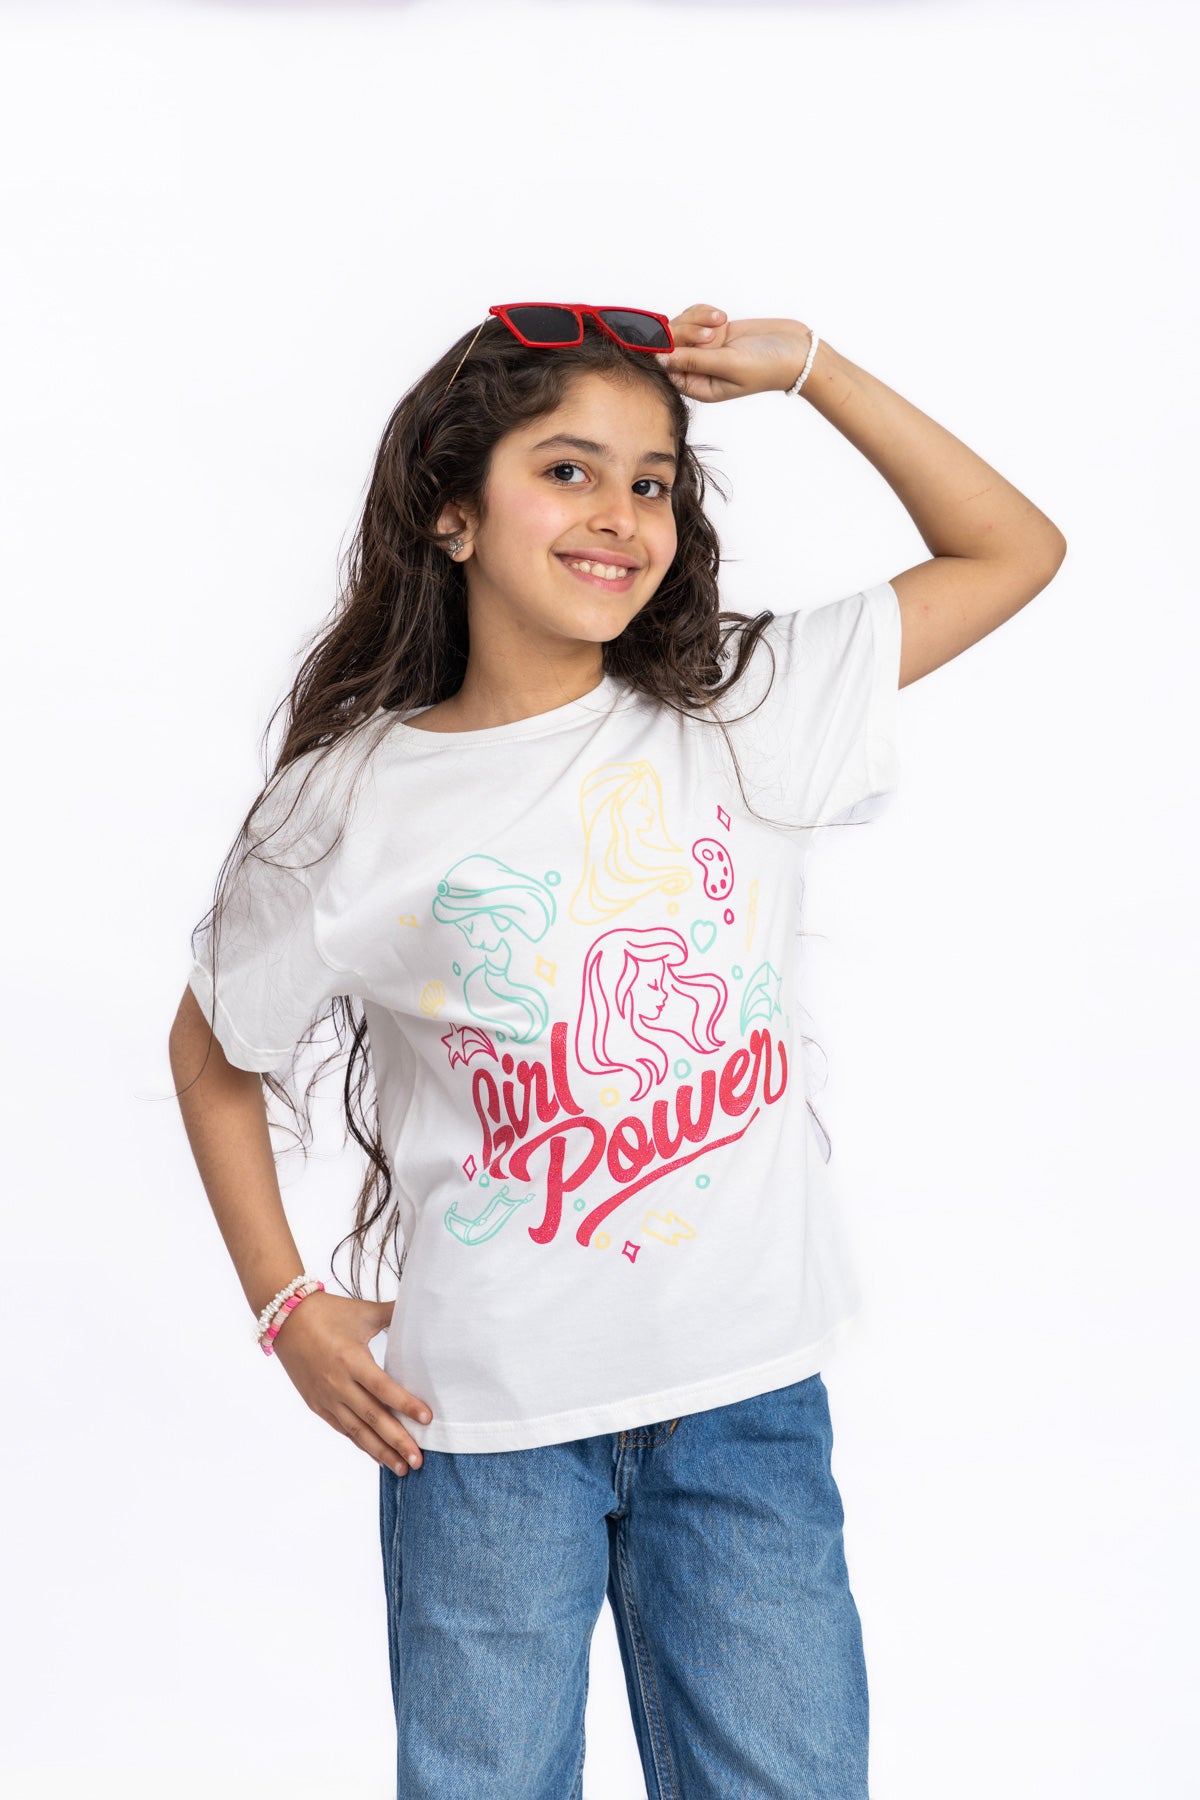 T-Shirt Girls Princess 7420